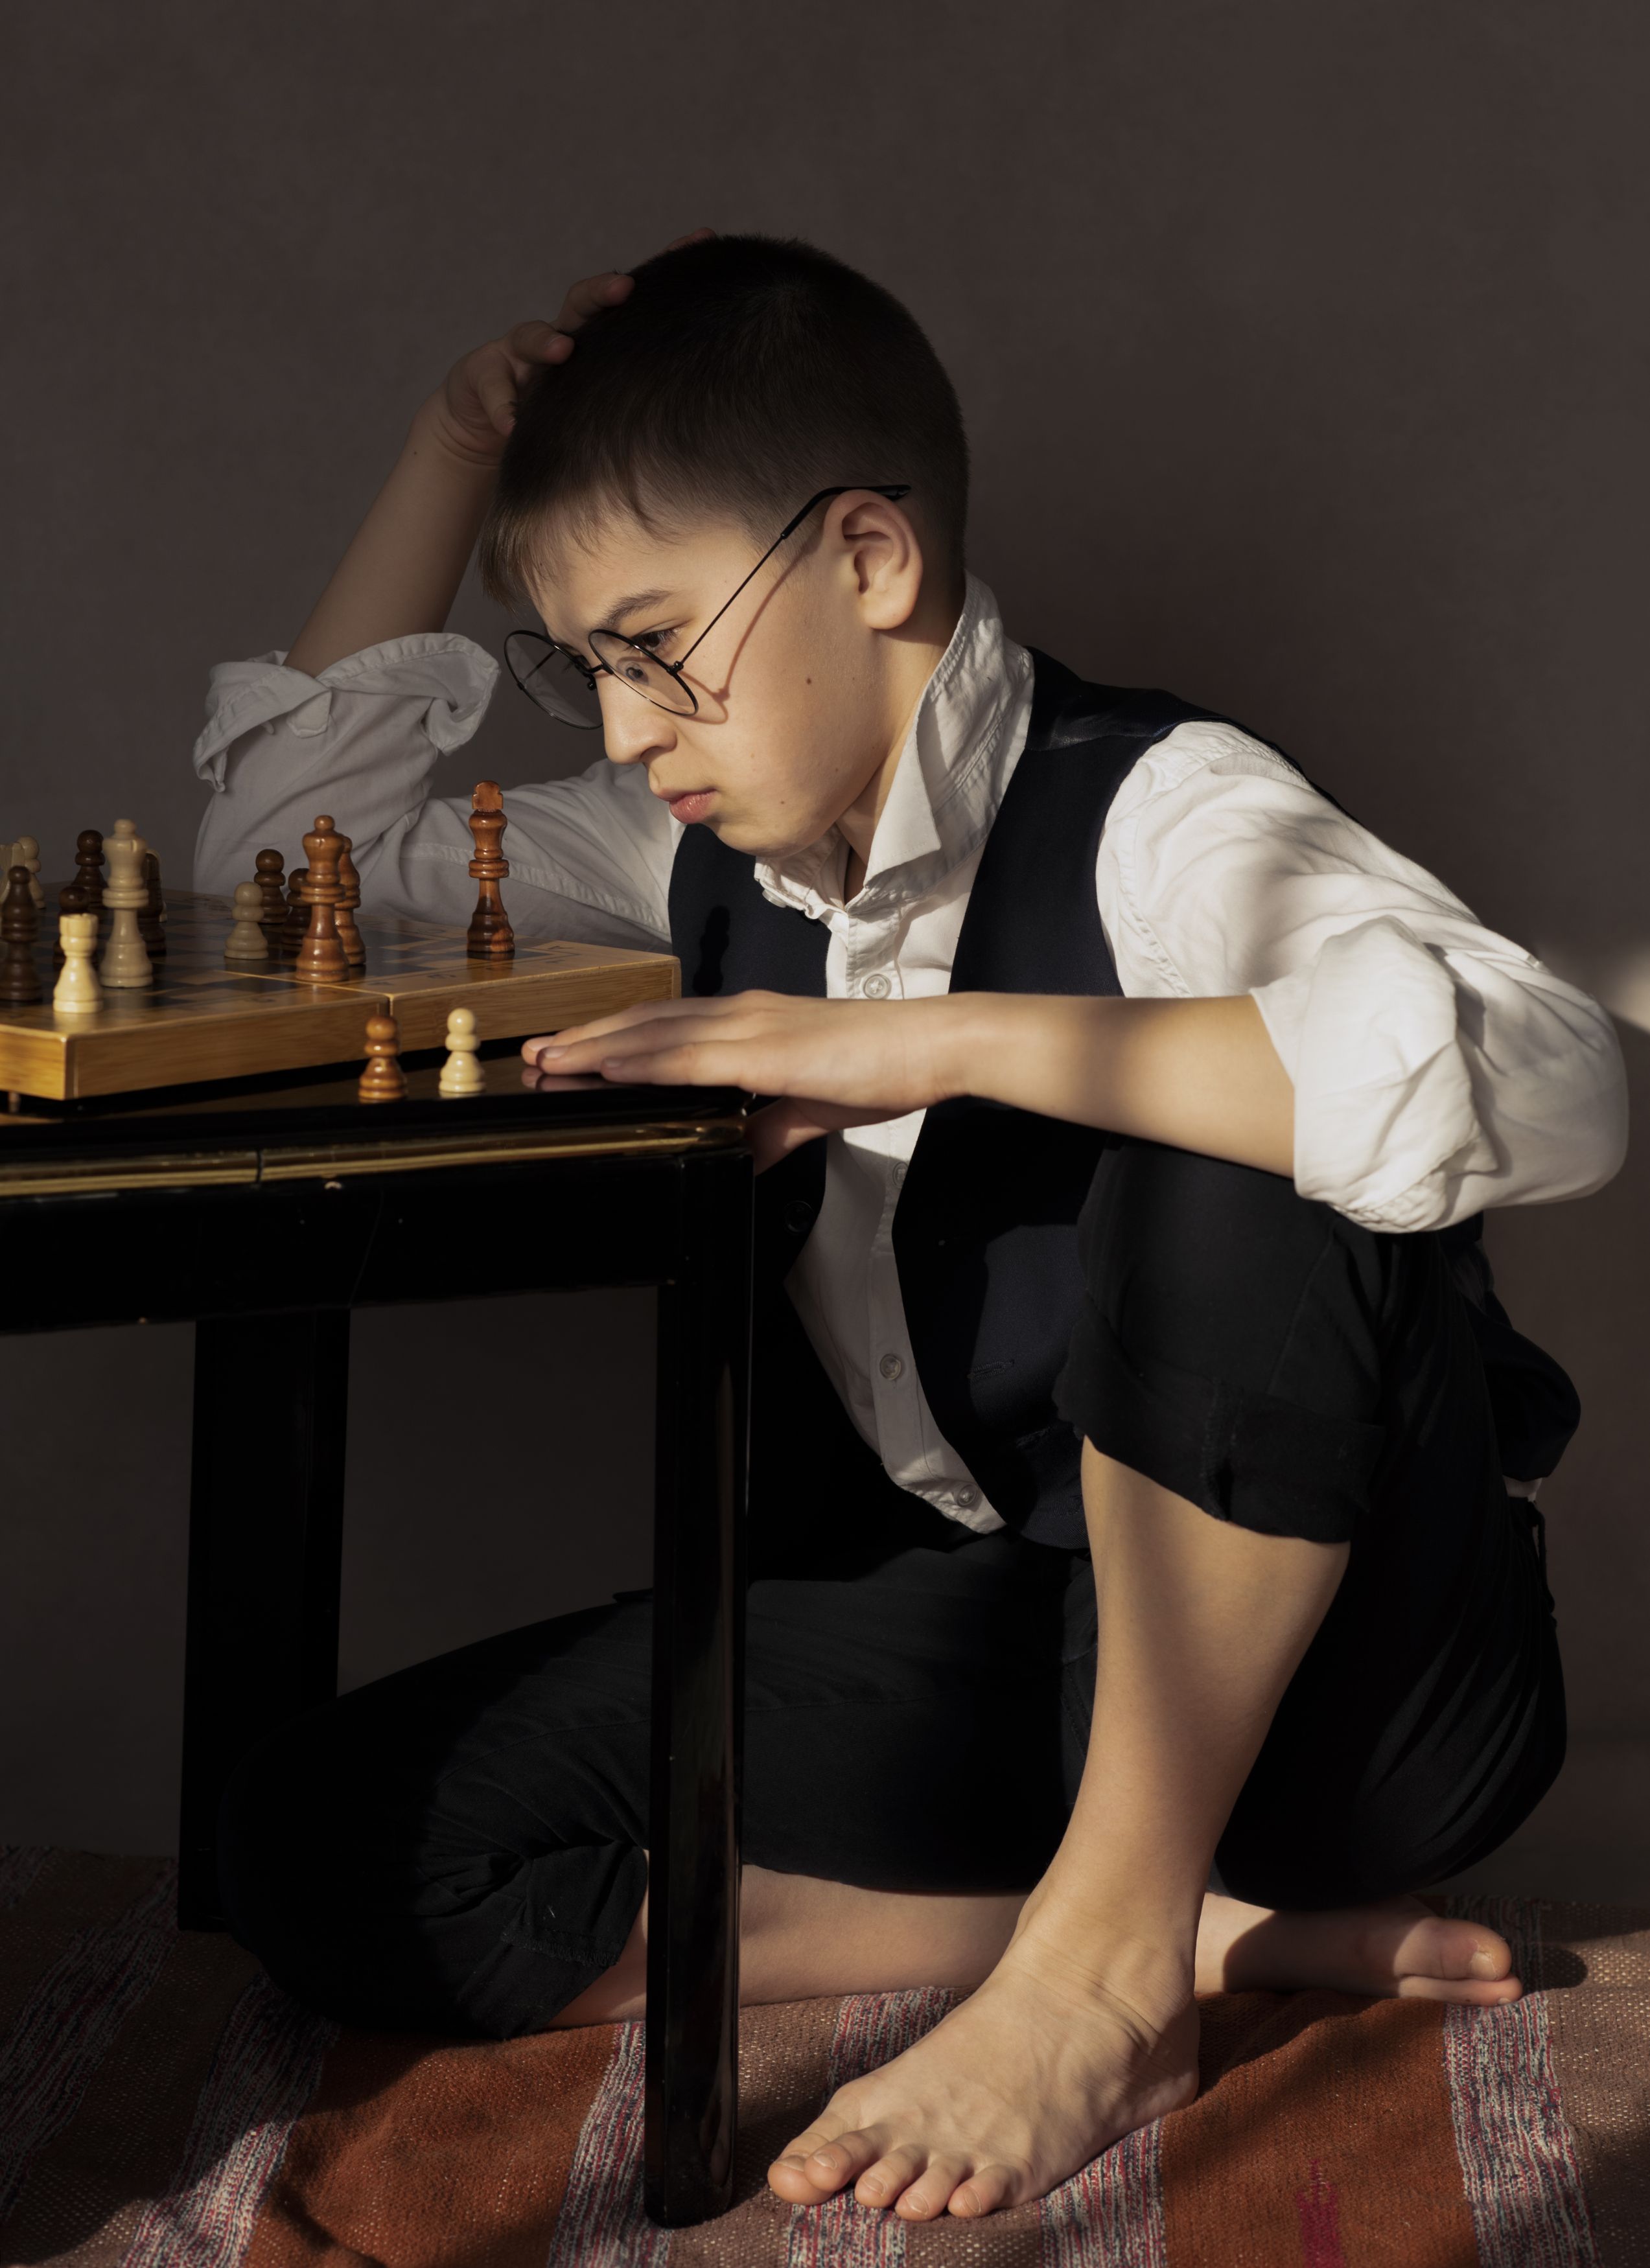 шахматы,игра,мальчик,юноша, Ирина Ефимова